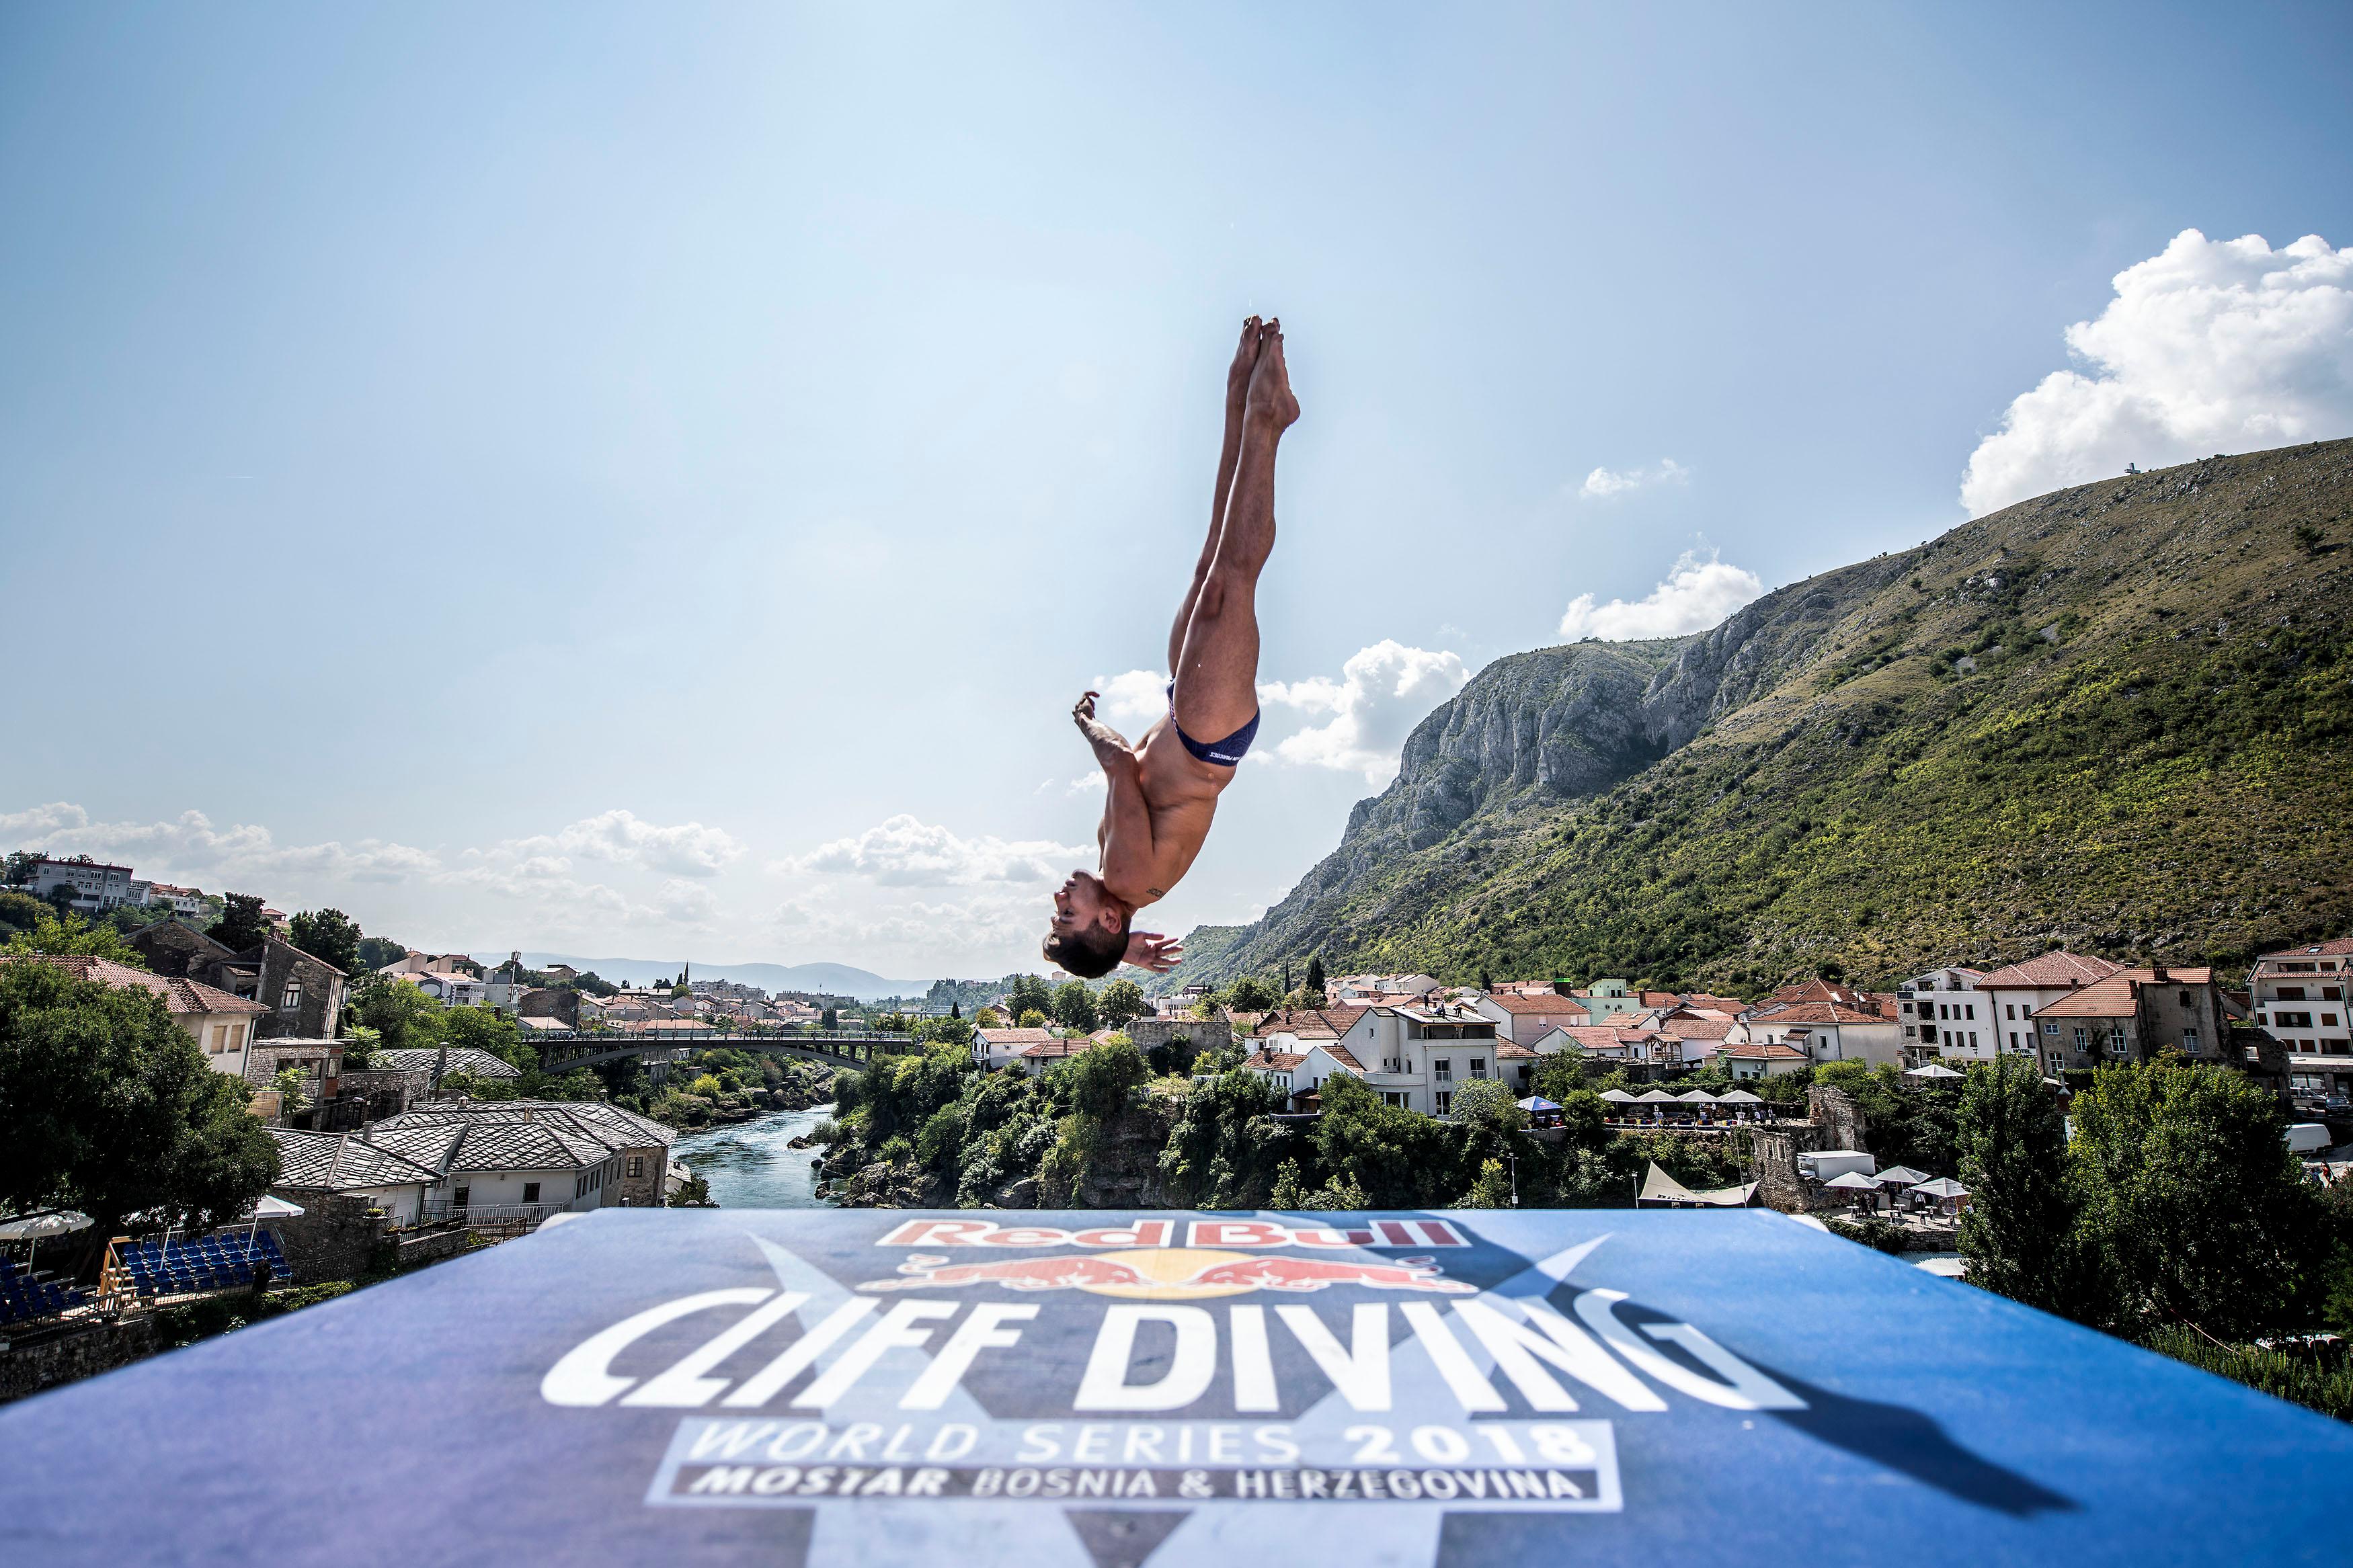 Red Bull Cliff Diving: Dvoje Meksikanaca vode u Mostaru